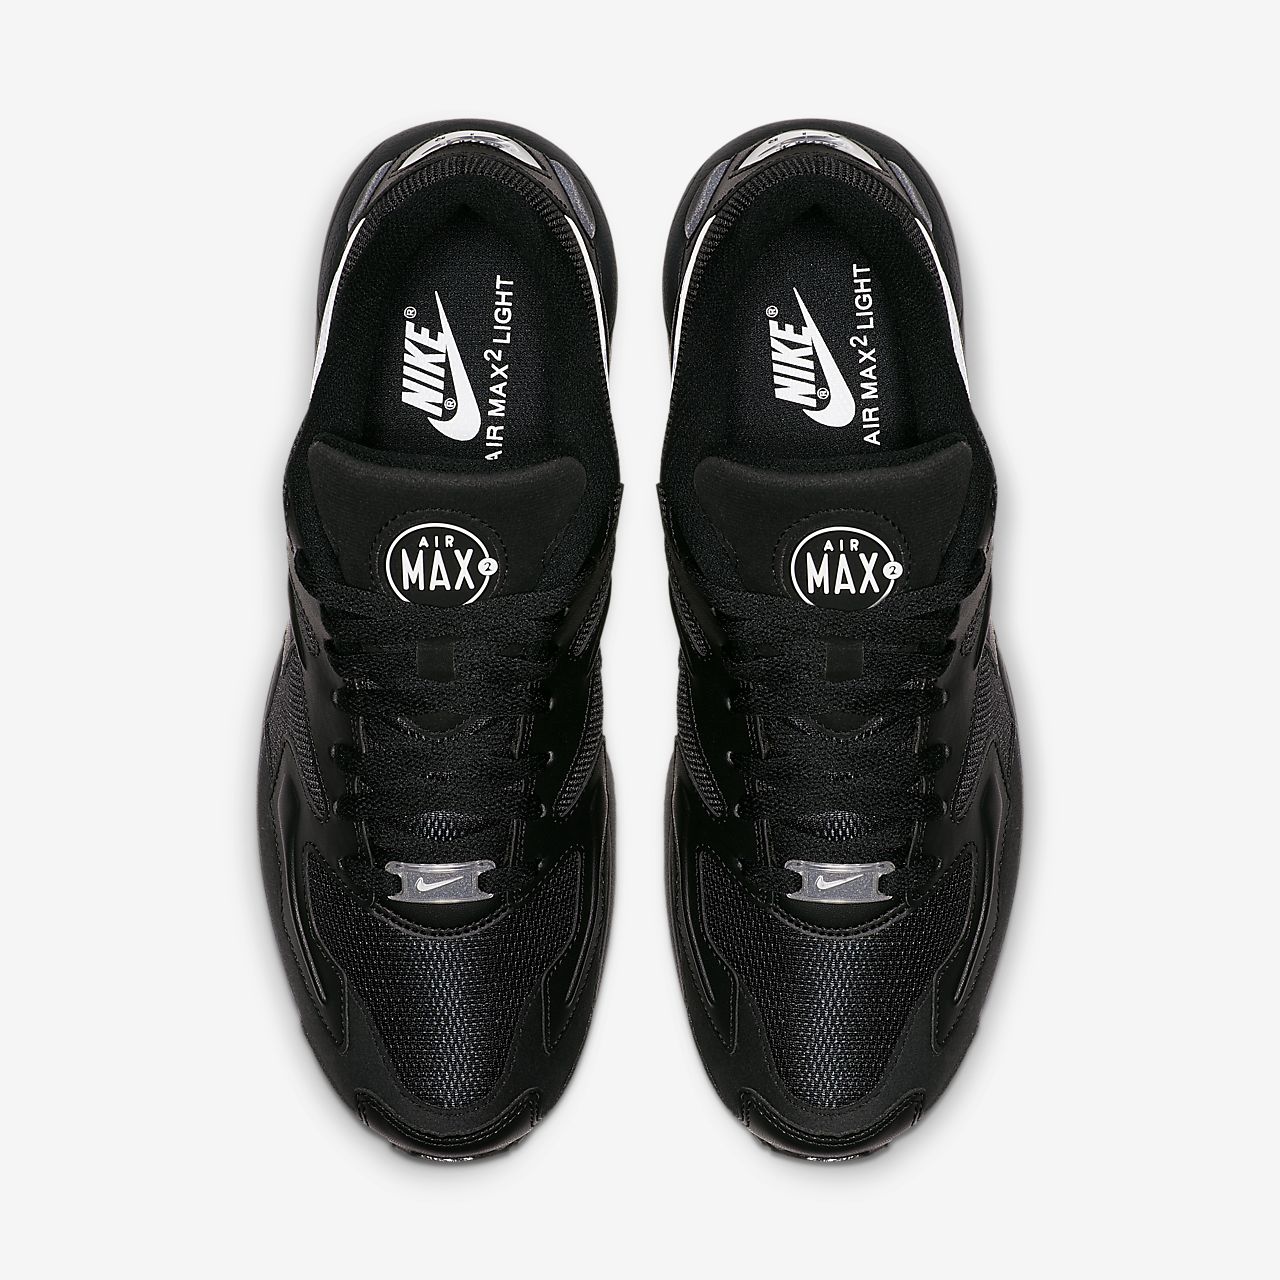 Nike Air Max2 Light - Sneakers - Sort/MørkeGrå/Hvide | DK-82943